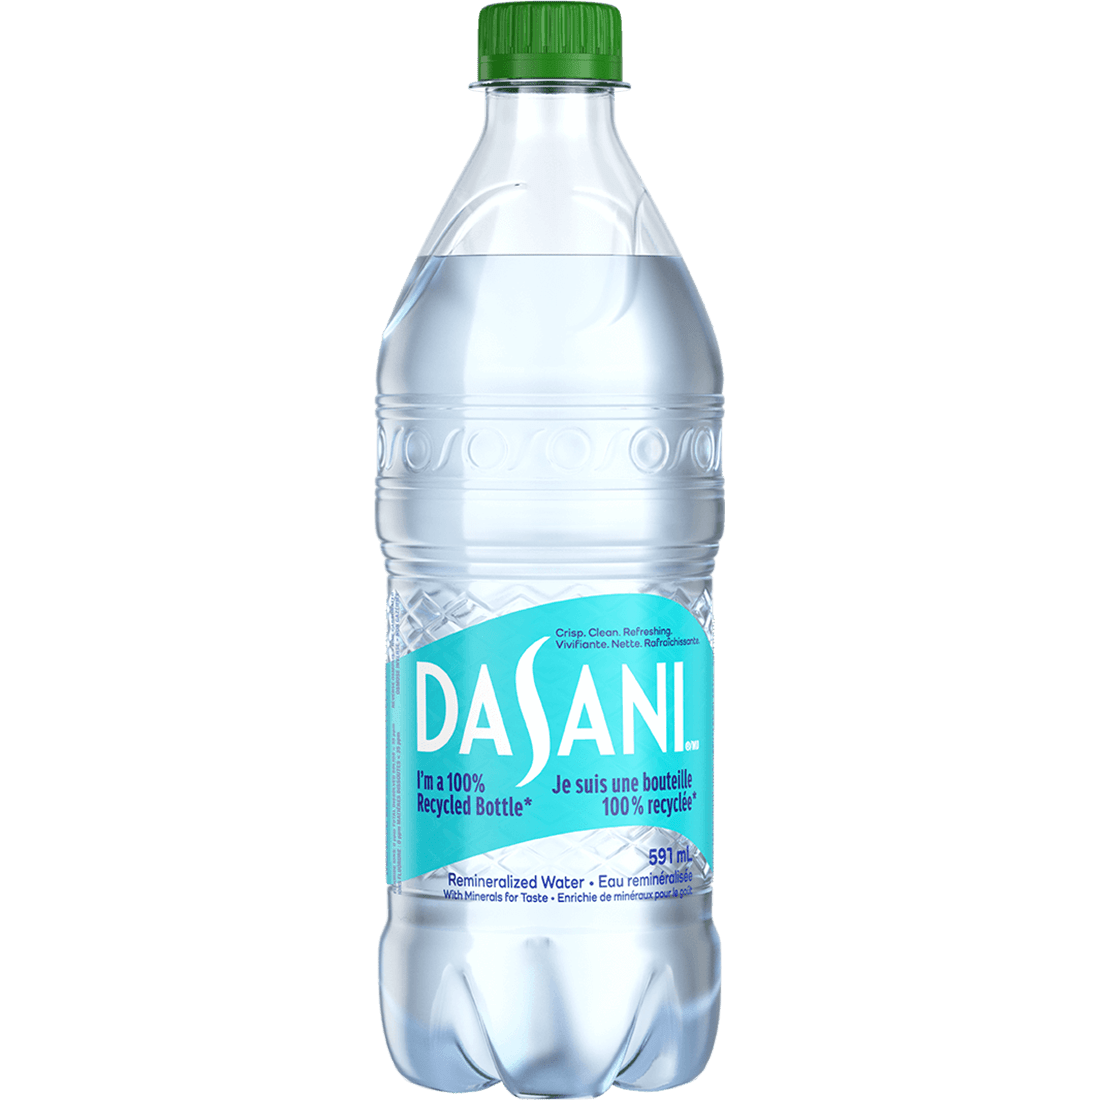 DASANI Purified water, 591 mL bottle